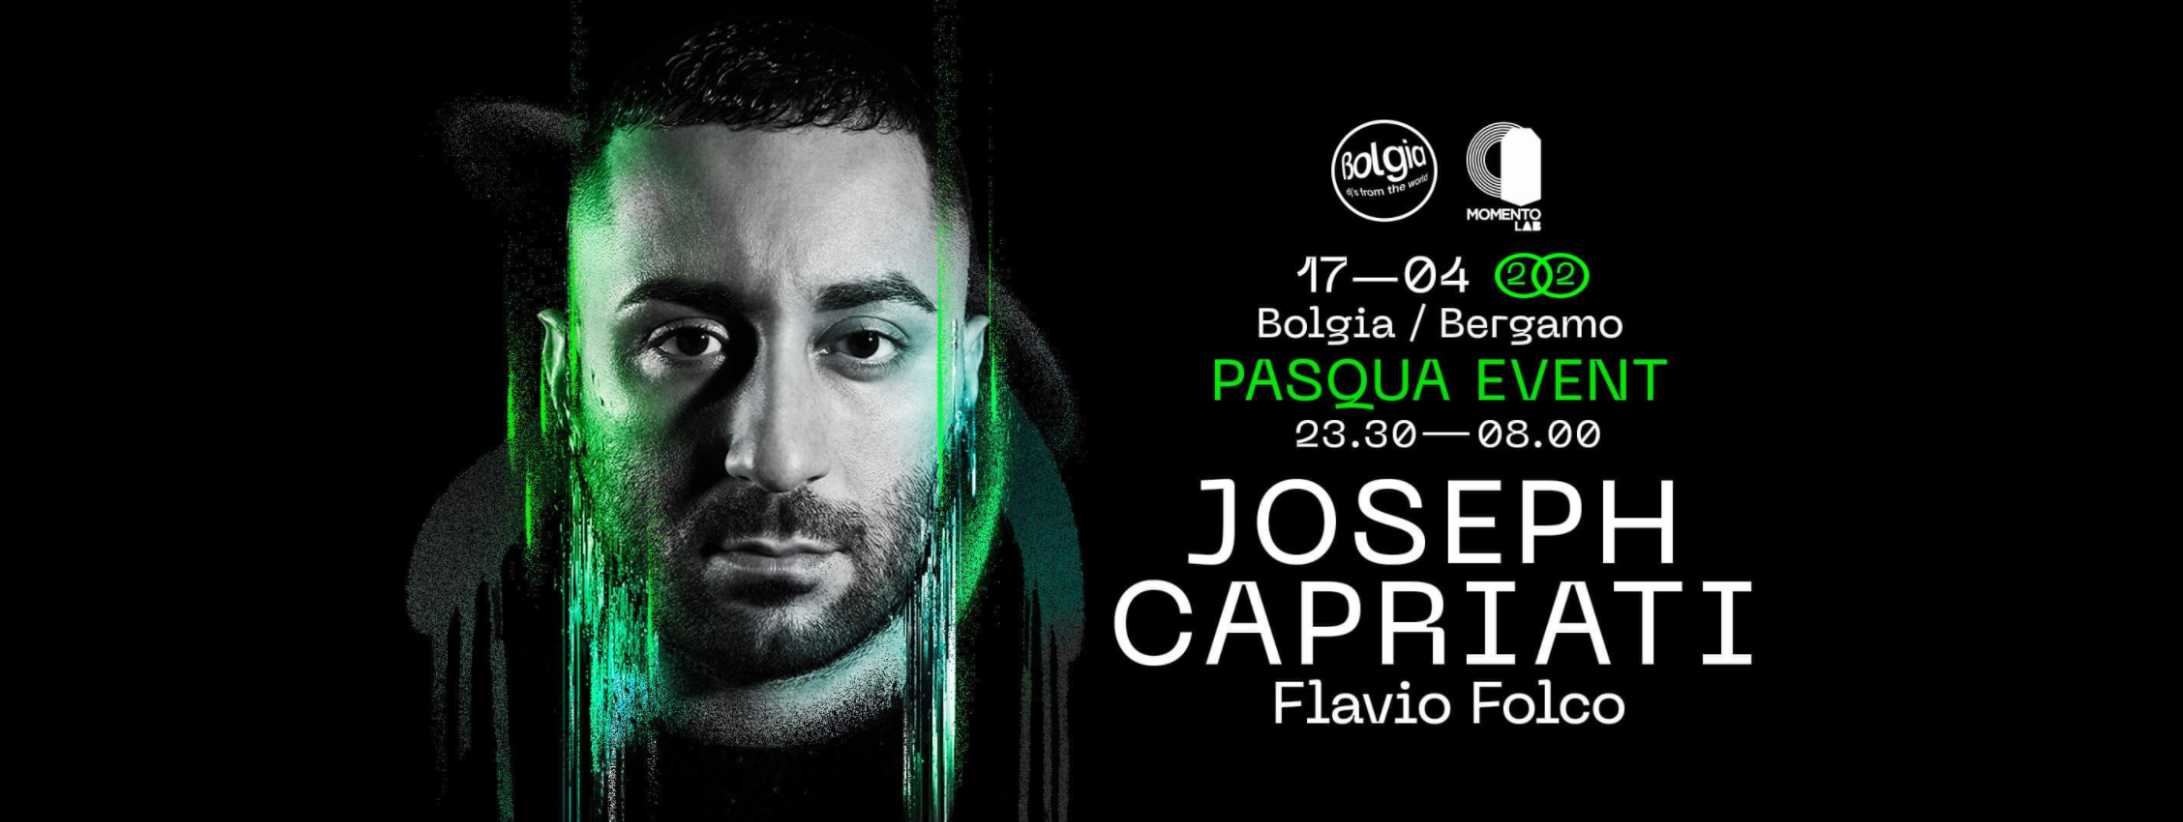 Joseph Capriati at Bolgia Pasqua 2022 Domenica 17 Aprile